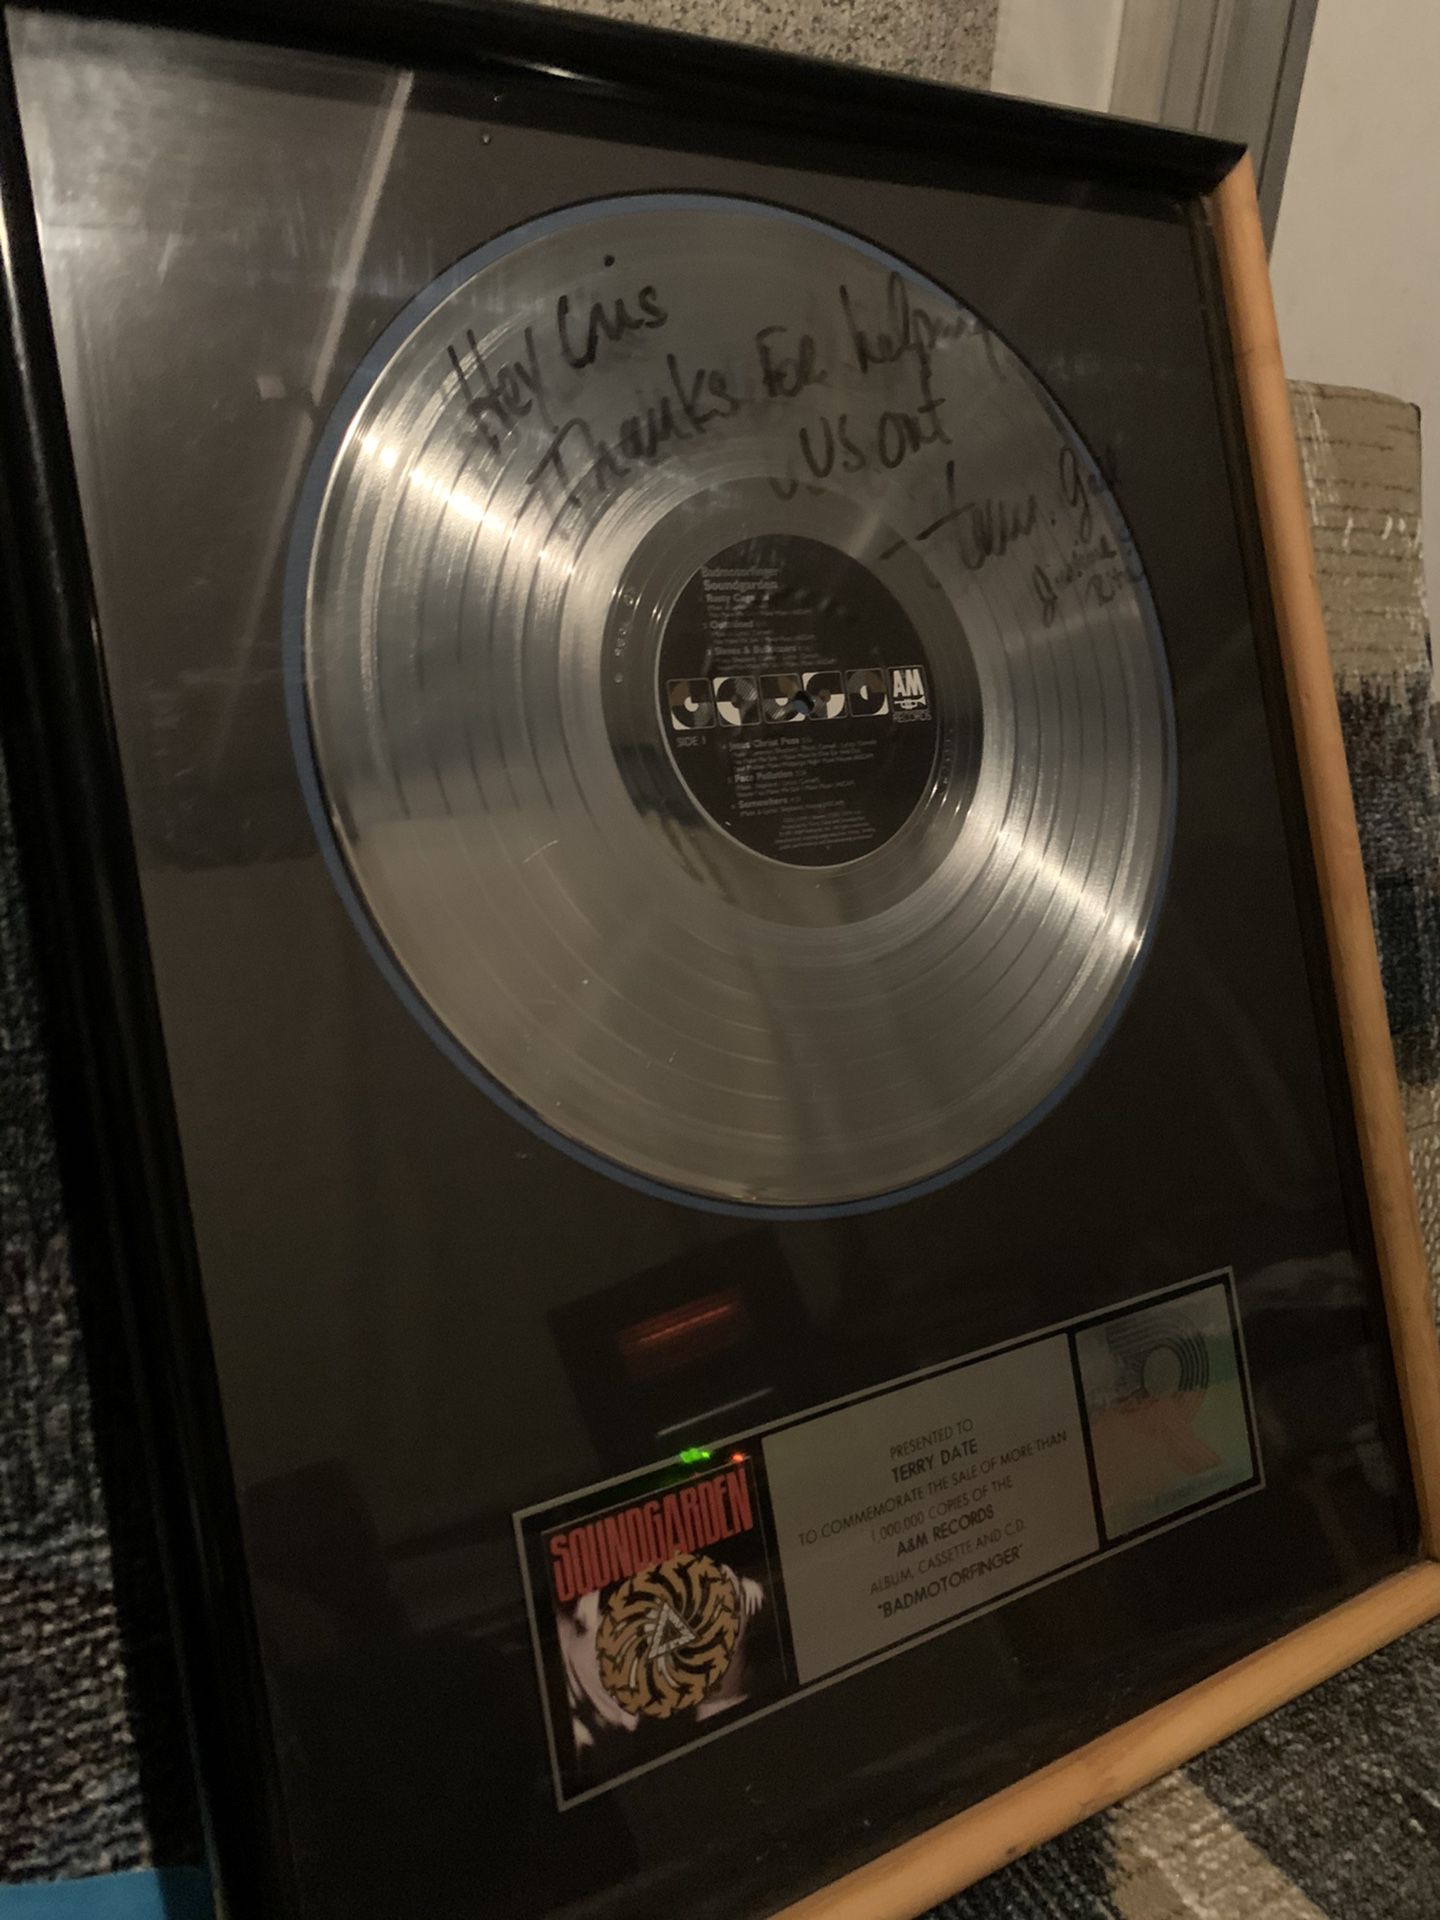 Soundgarden BADMOTORFINGER Platinum Record